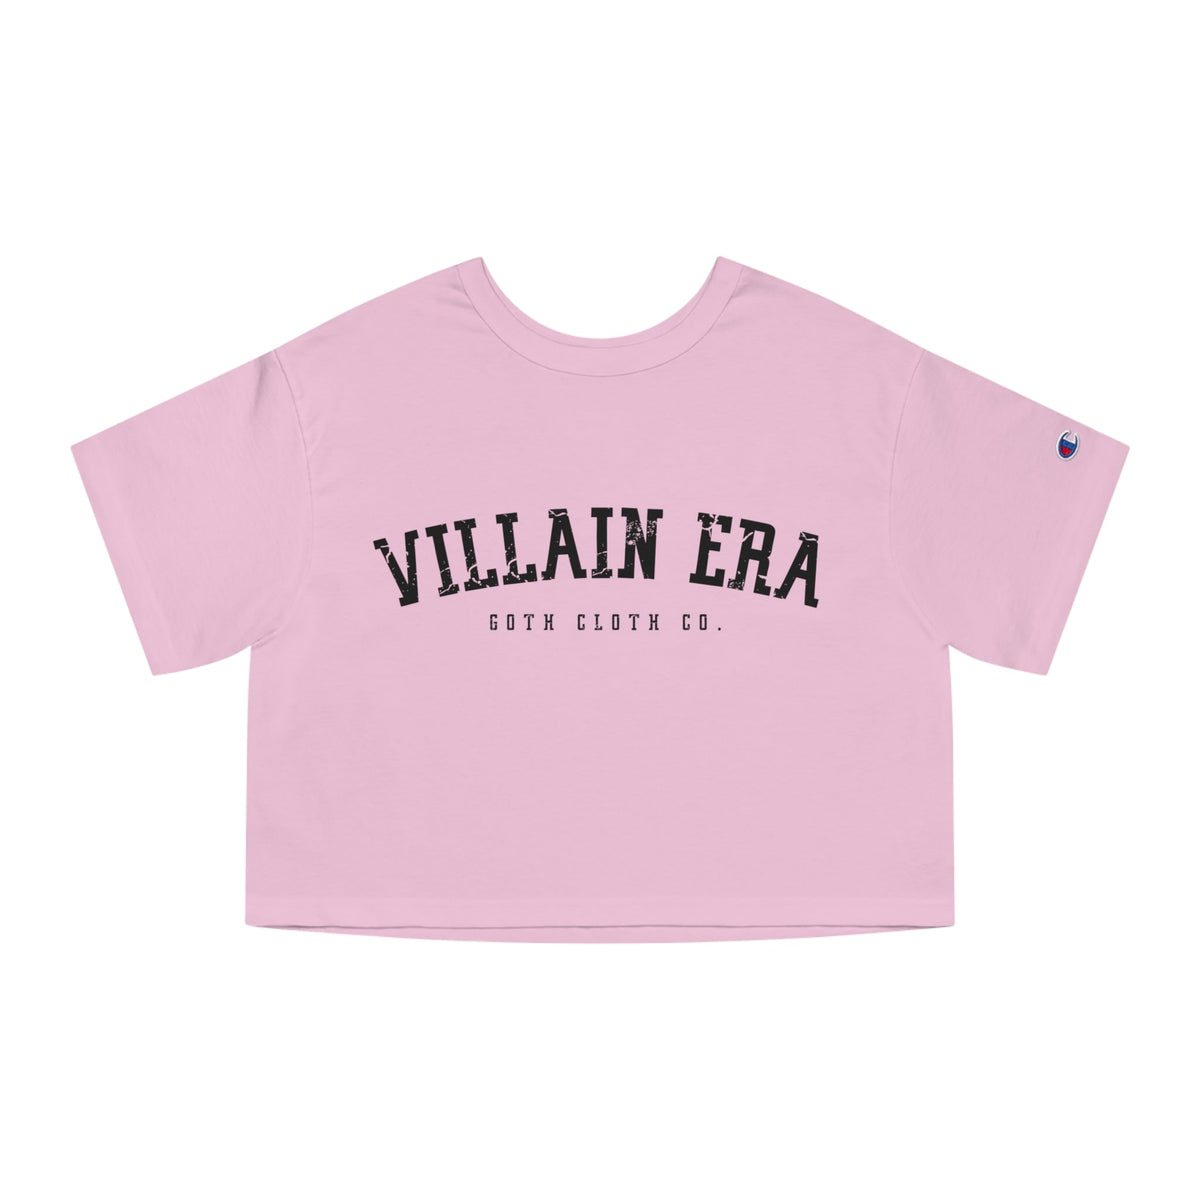 Villain Era Uni. Heavyweight Crop Top - Goth Cloth Co.T-Shirt14957850402314704329